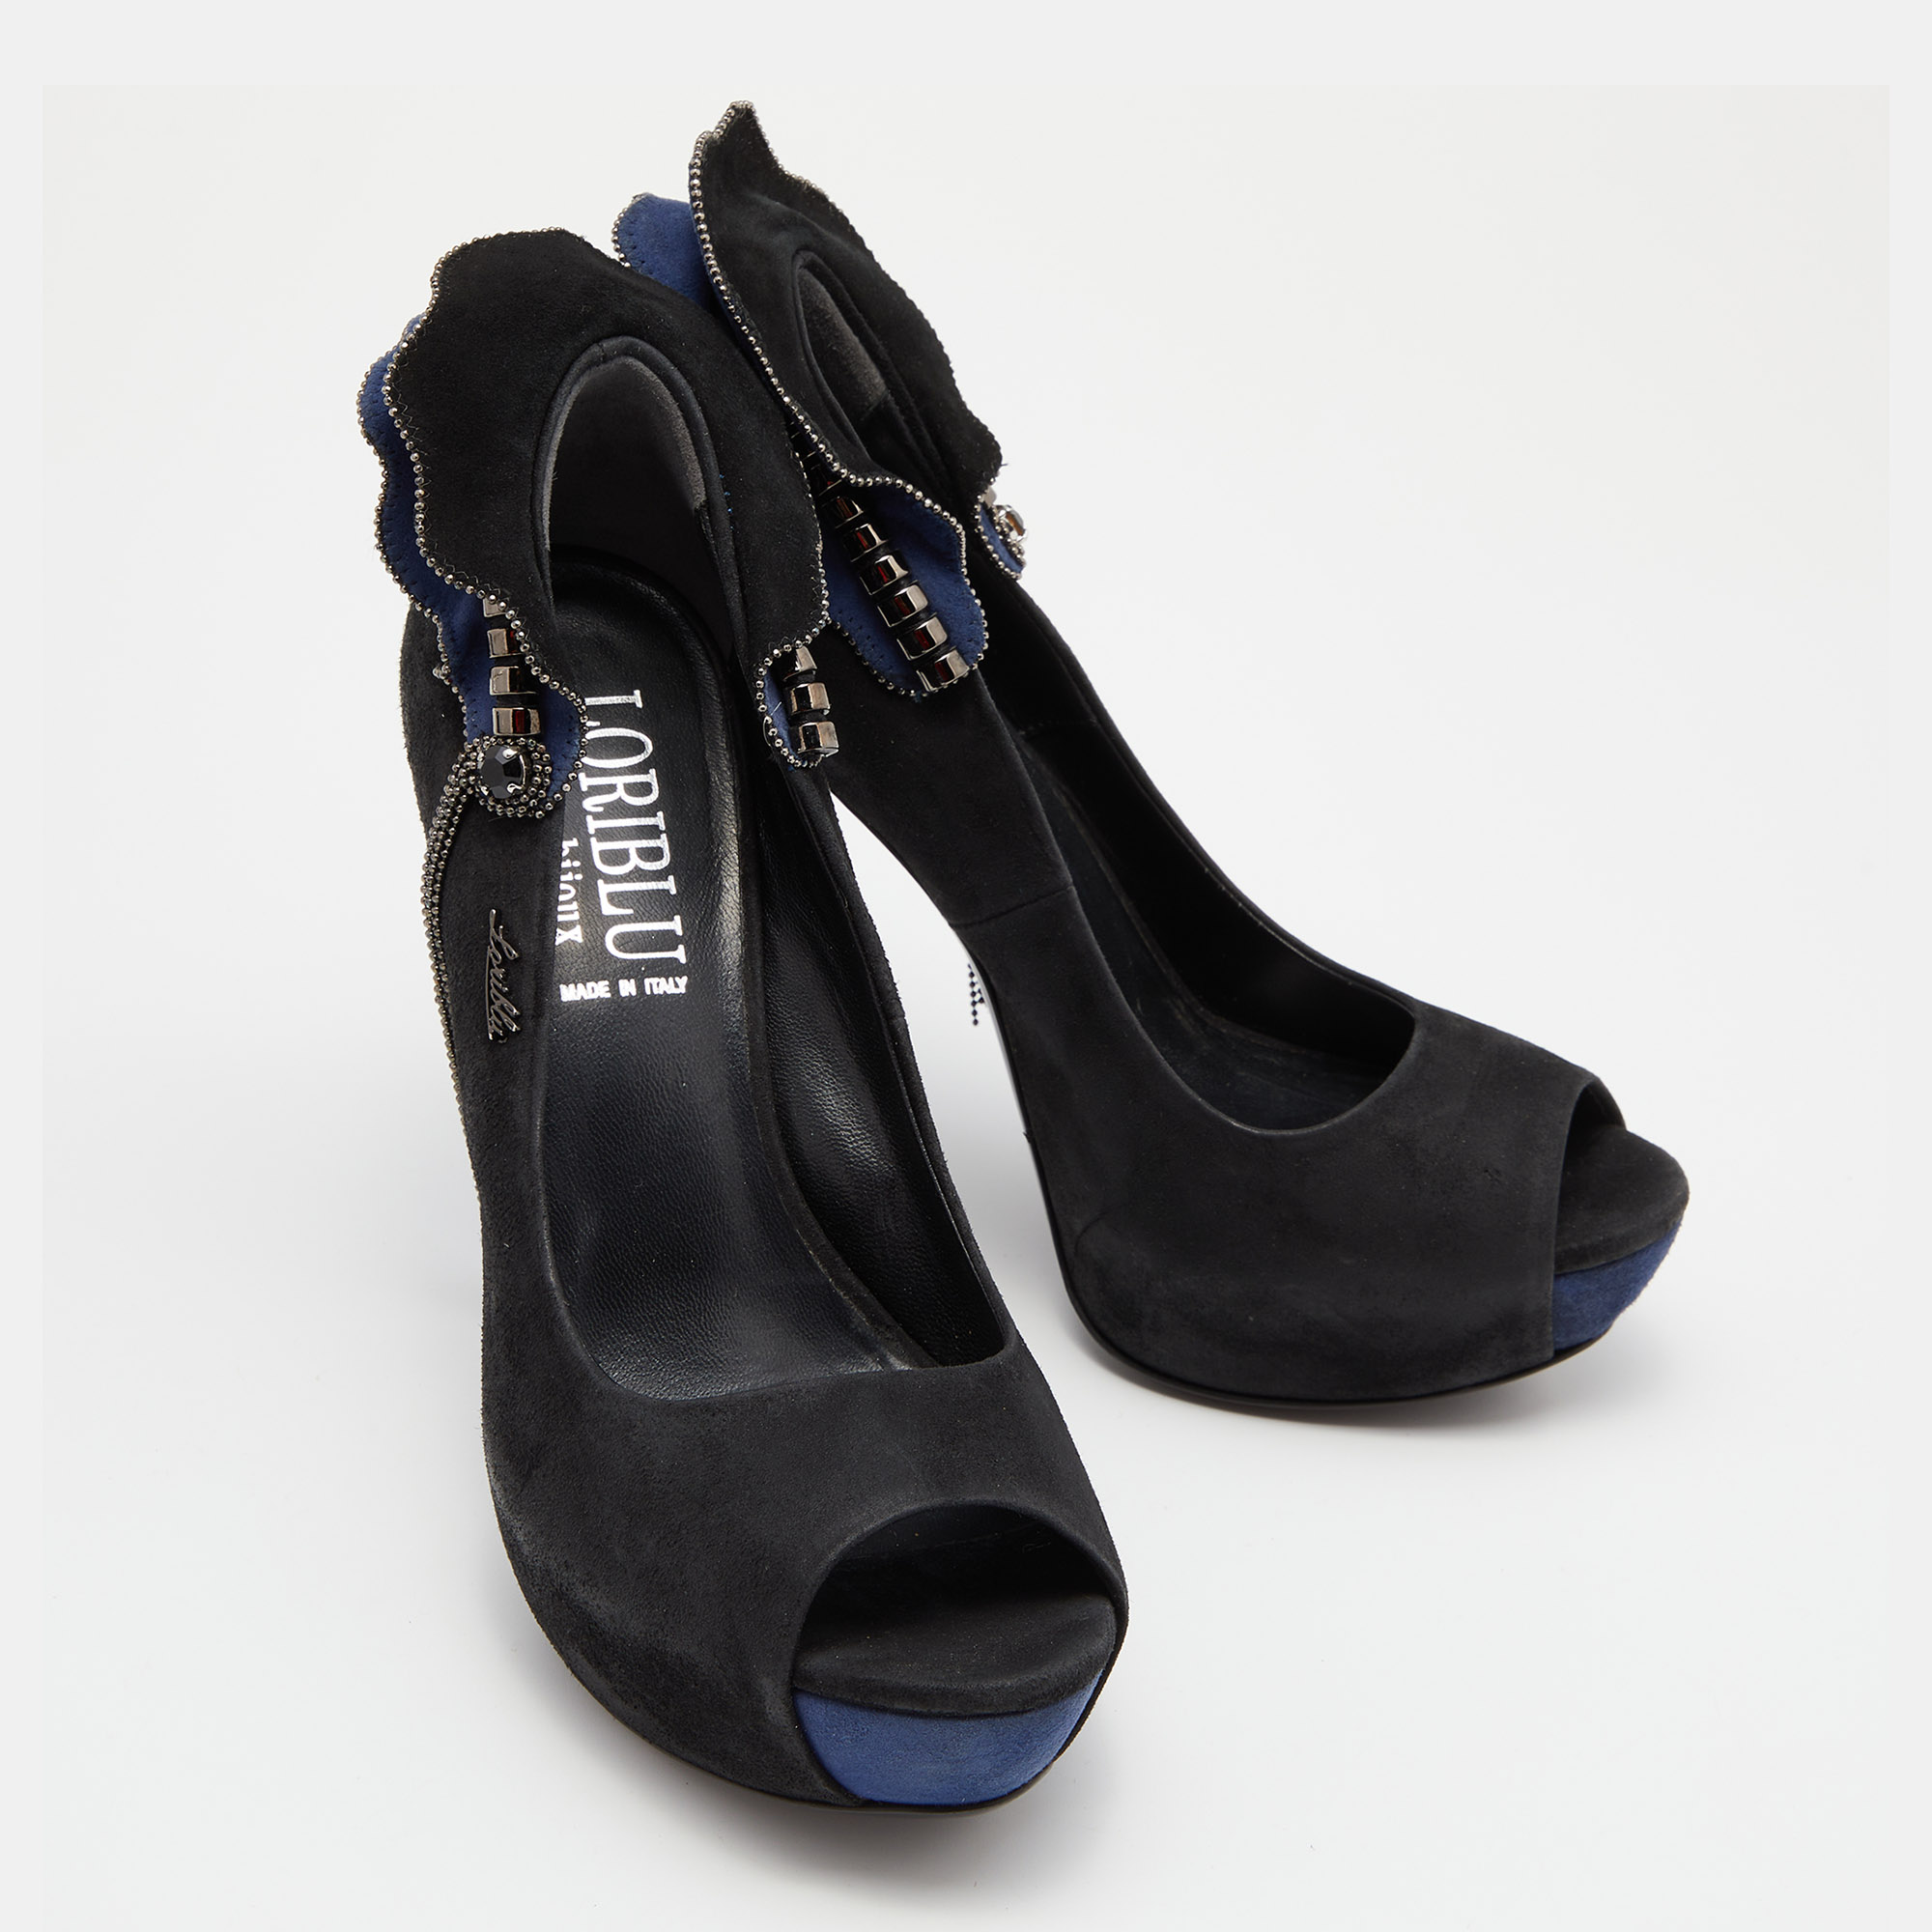 Loriblu Black/Blue Suede Embellished Peep Toe Pumps Size 37